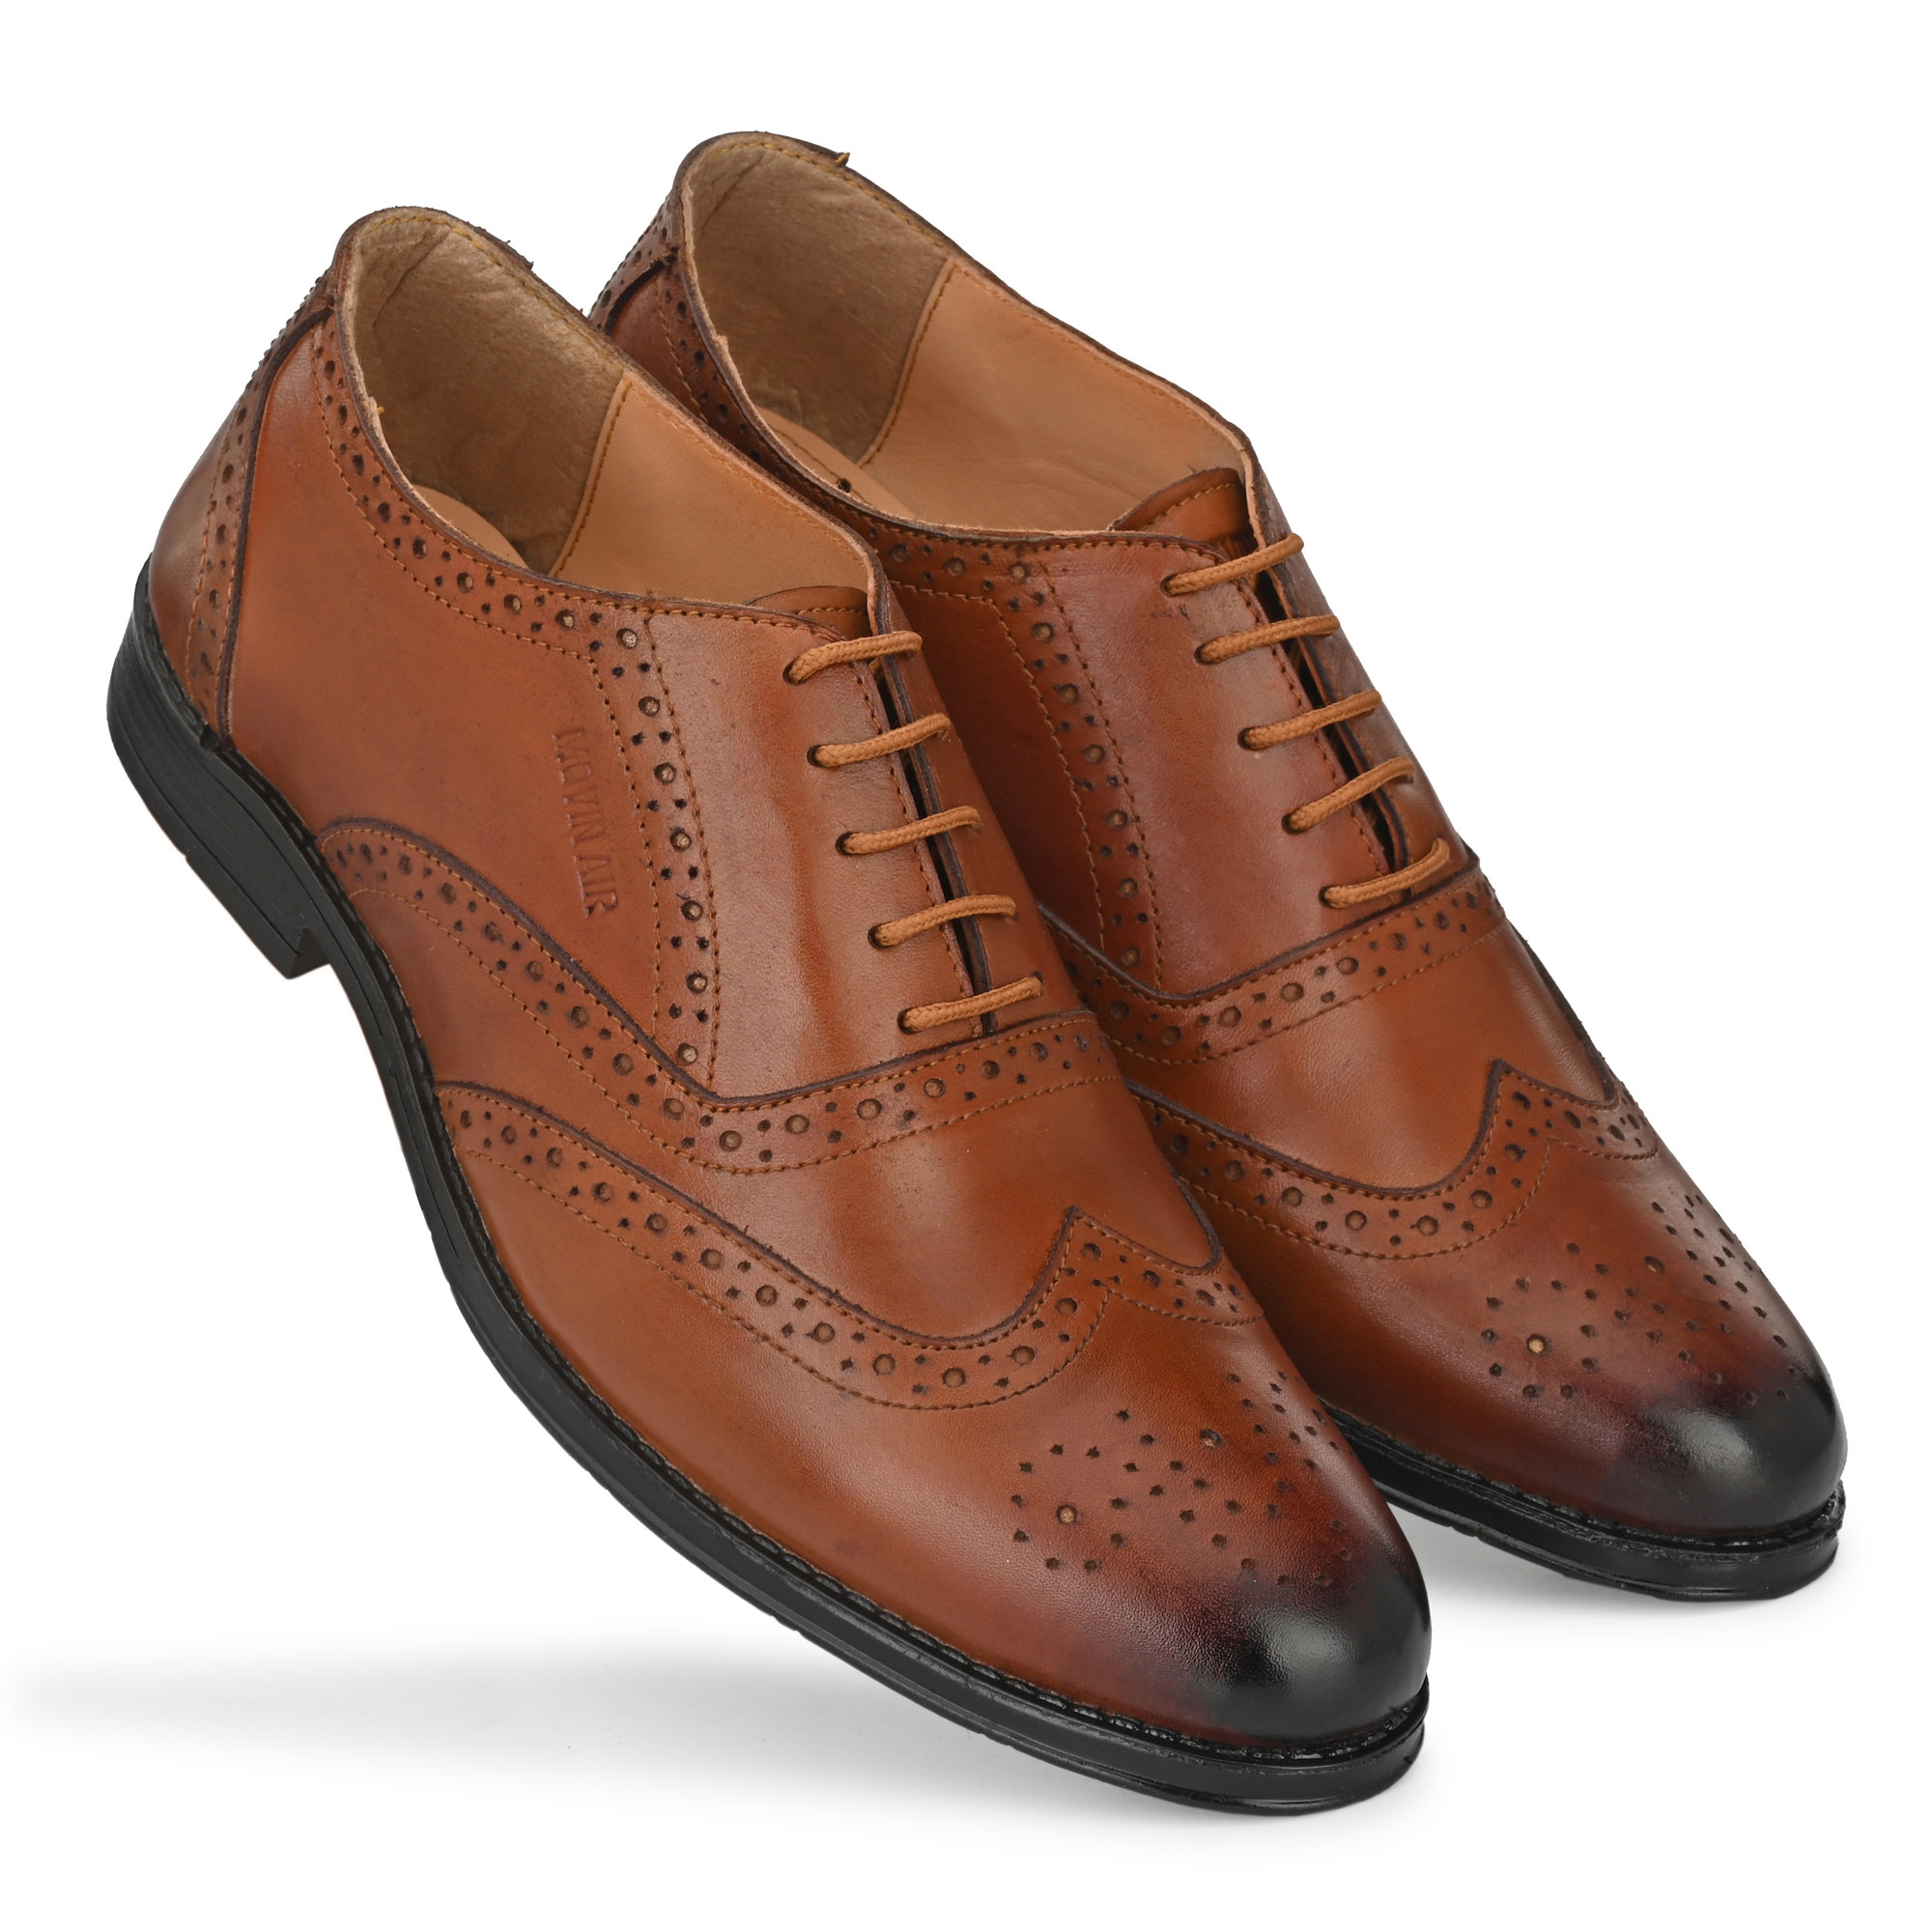 Buy Men Tan Casual Sneakers Online | SKU: 71-8425-23-40-Metro Shoes